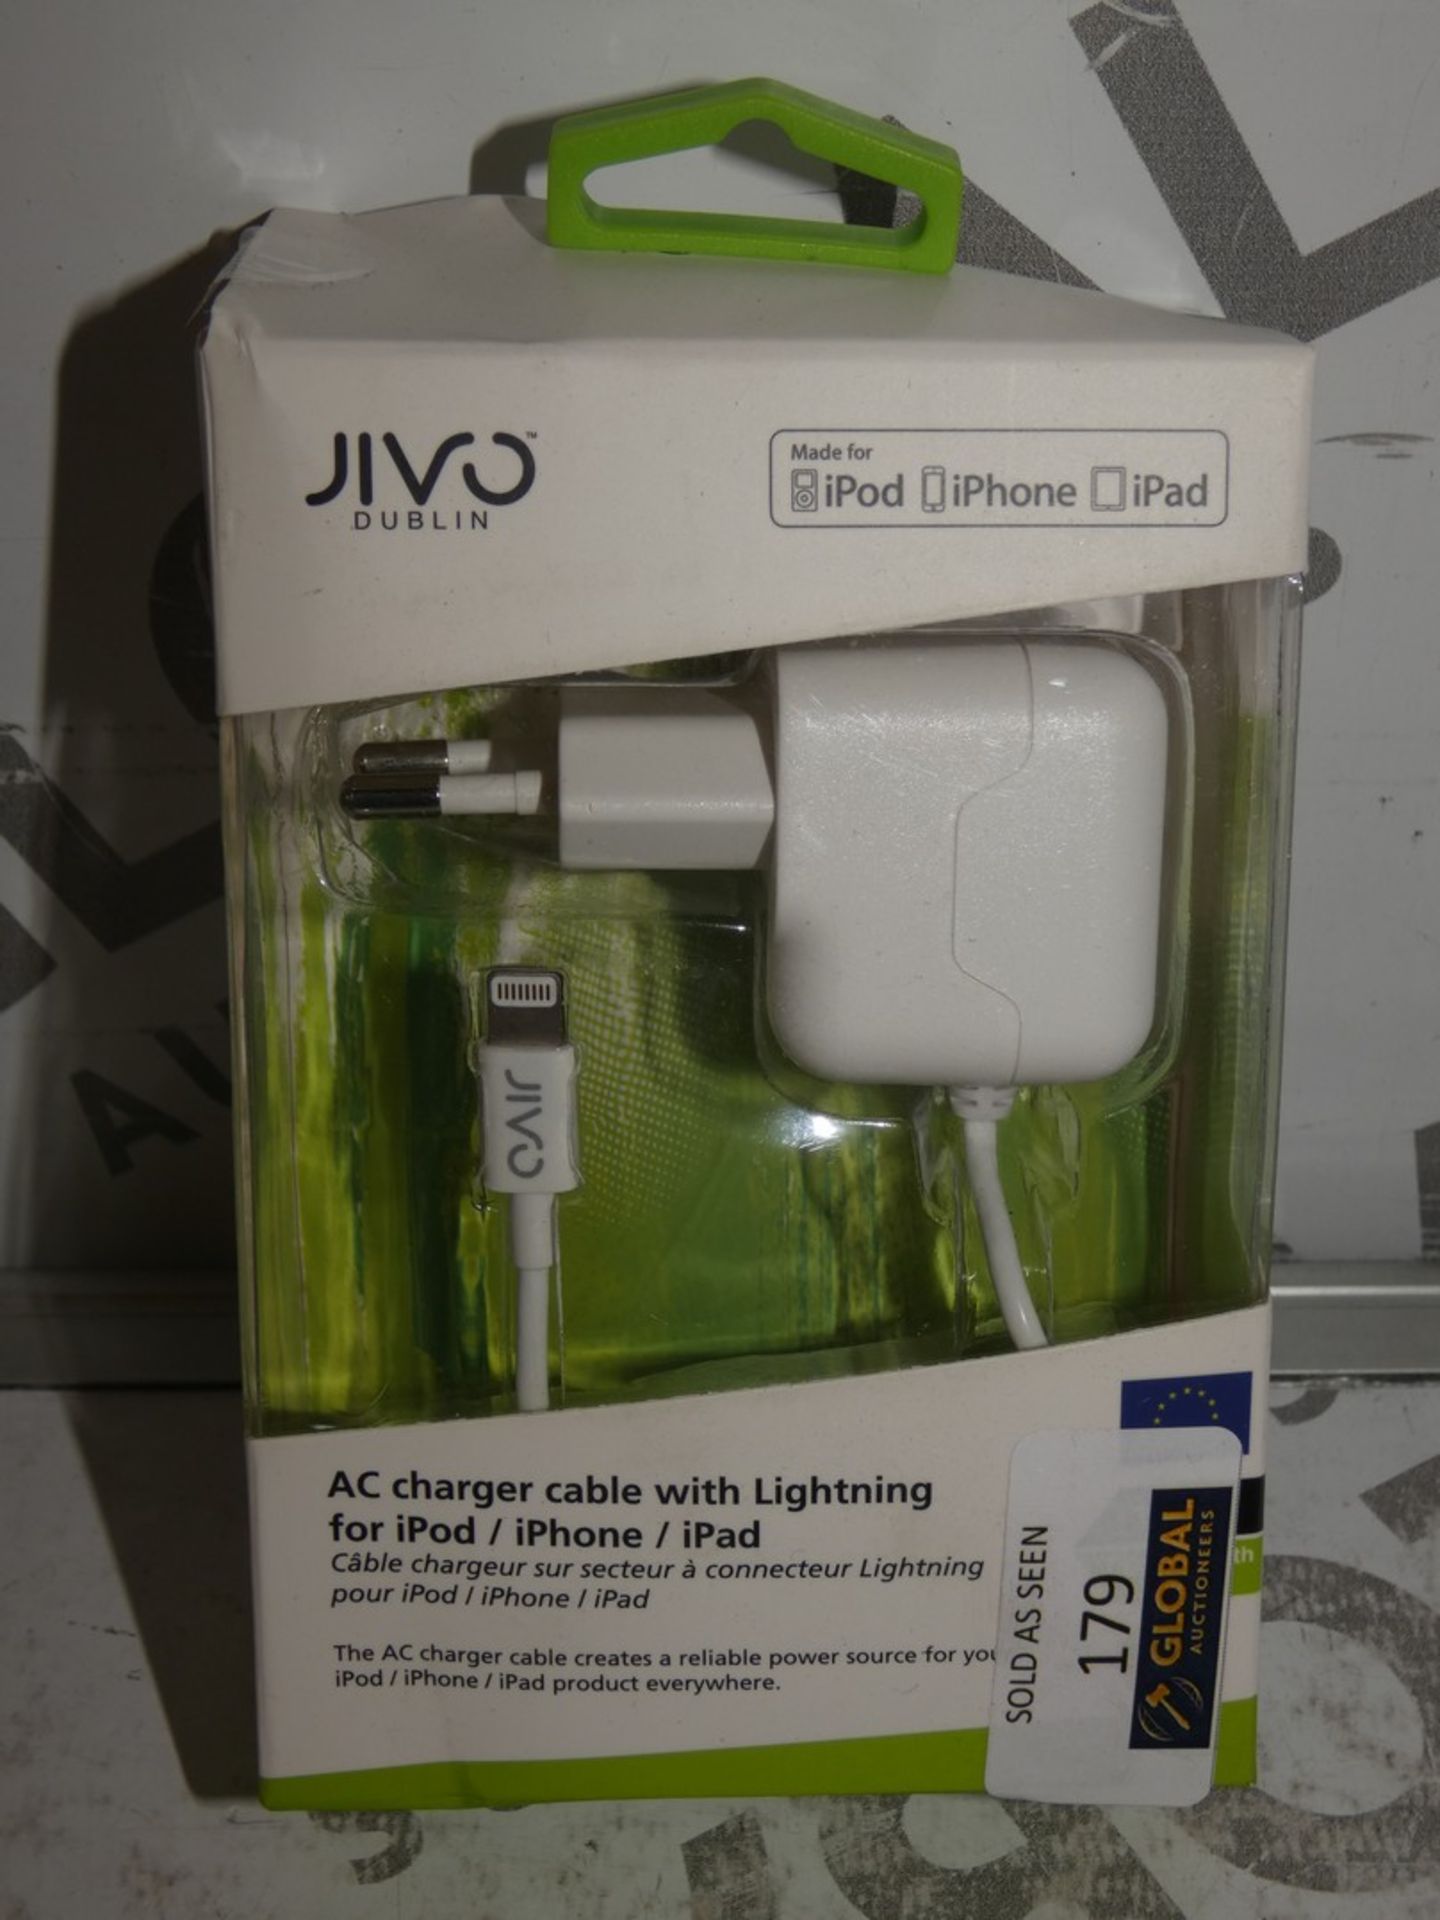 Boxed Jivo Iphone, Ipod and Ipad Chargers